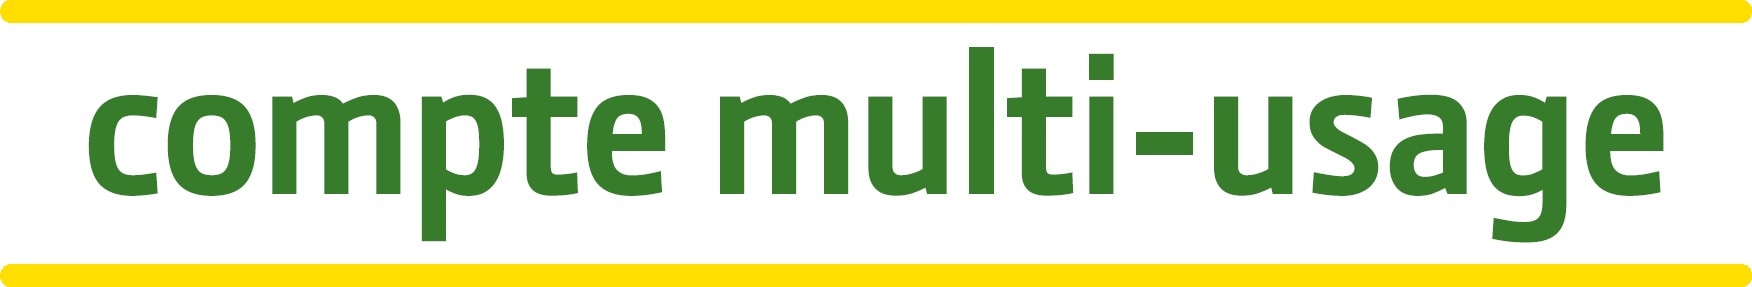 Logo du compte multi-usage